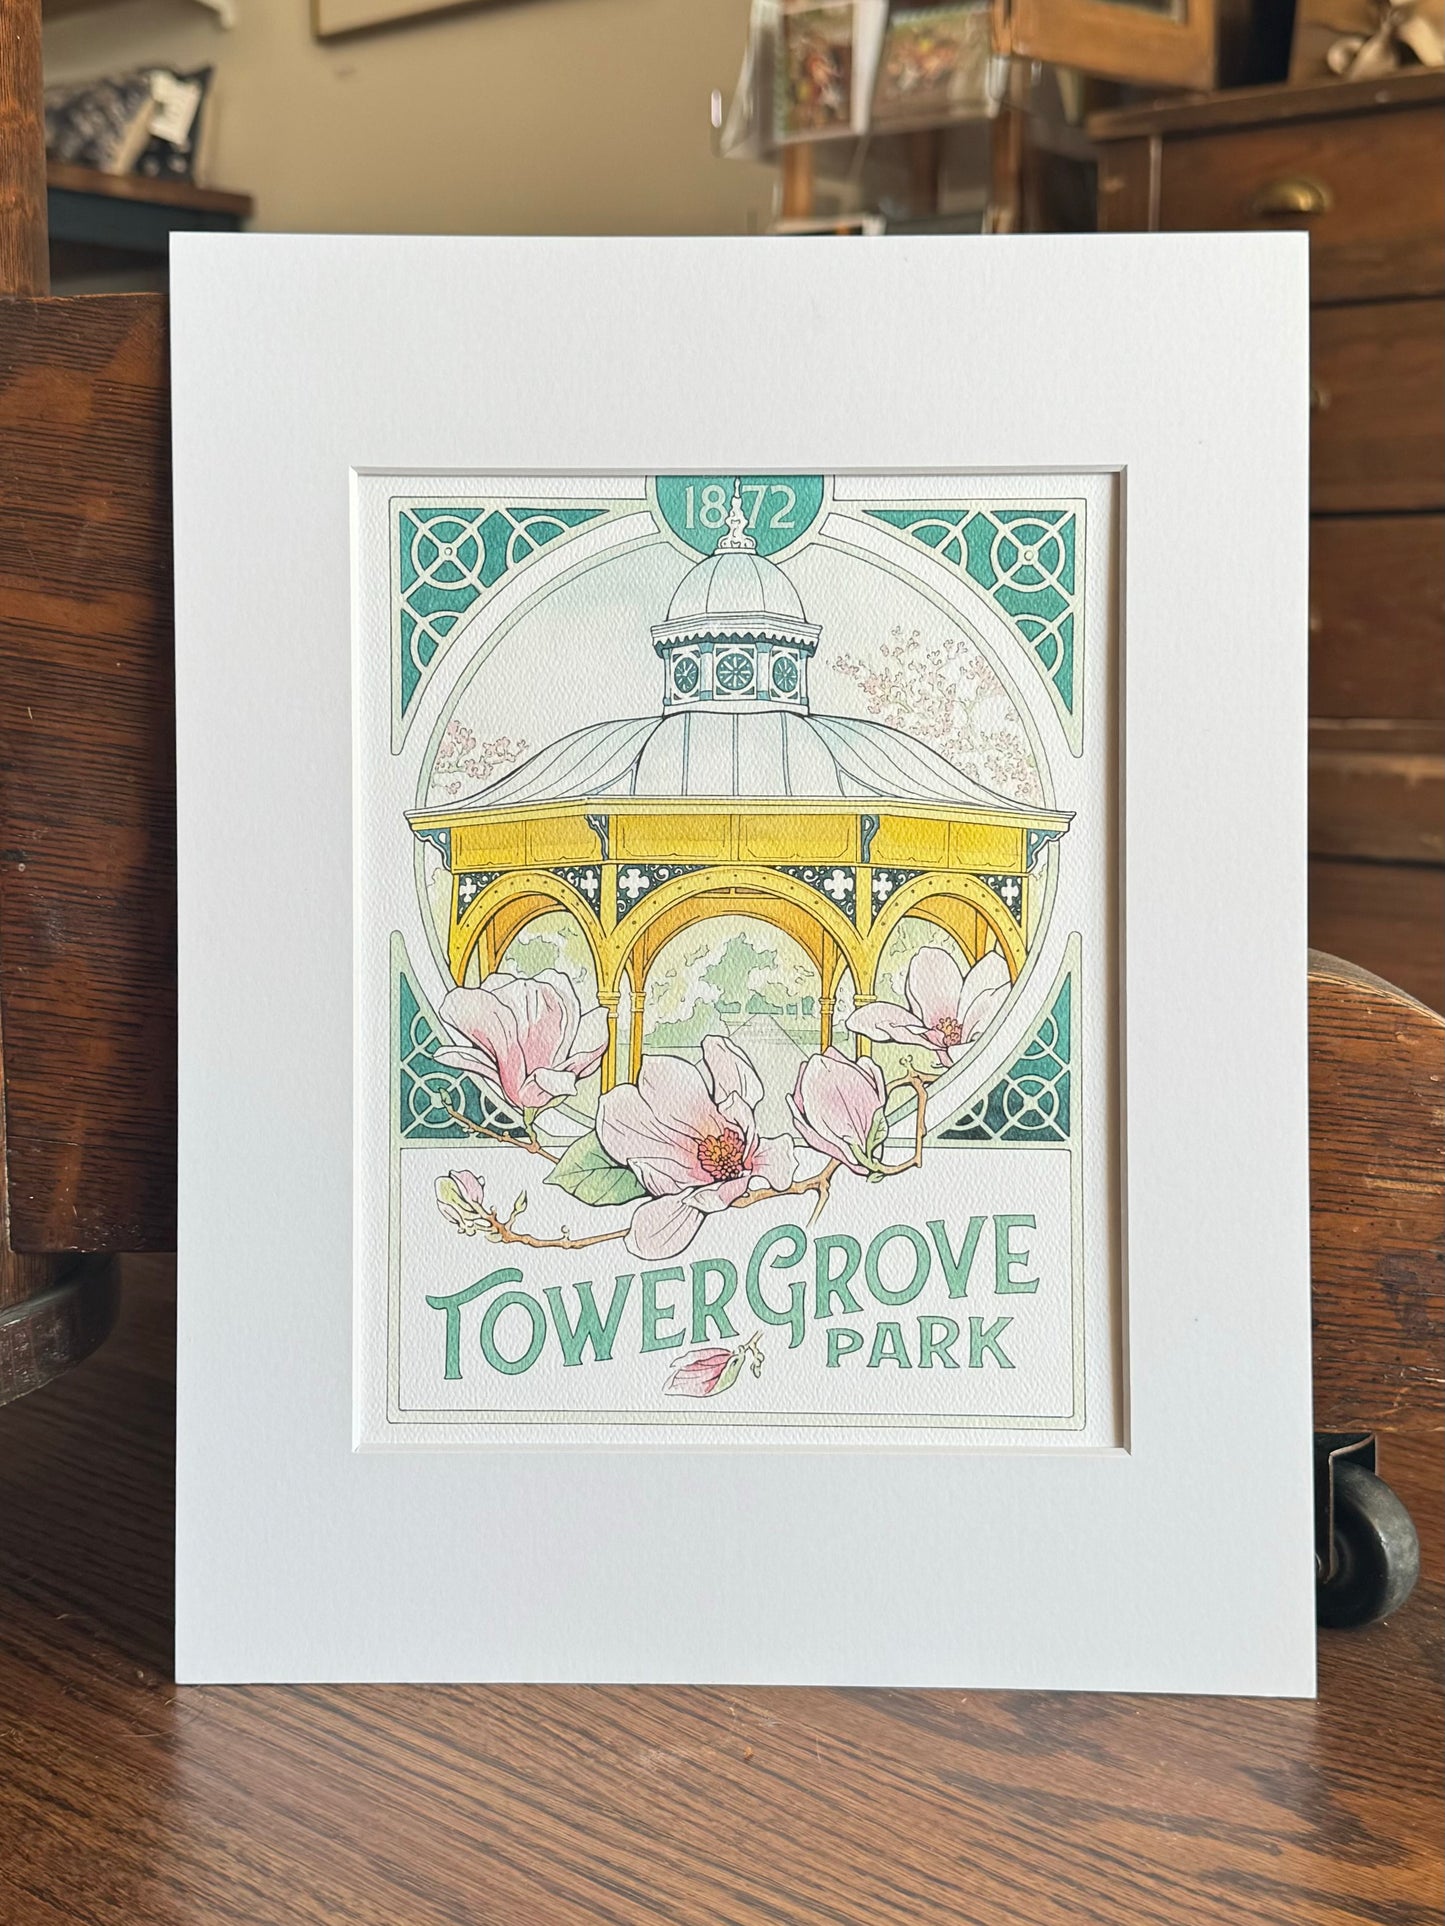 "Tower Grove Park" - Print